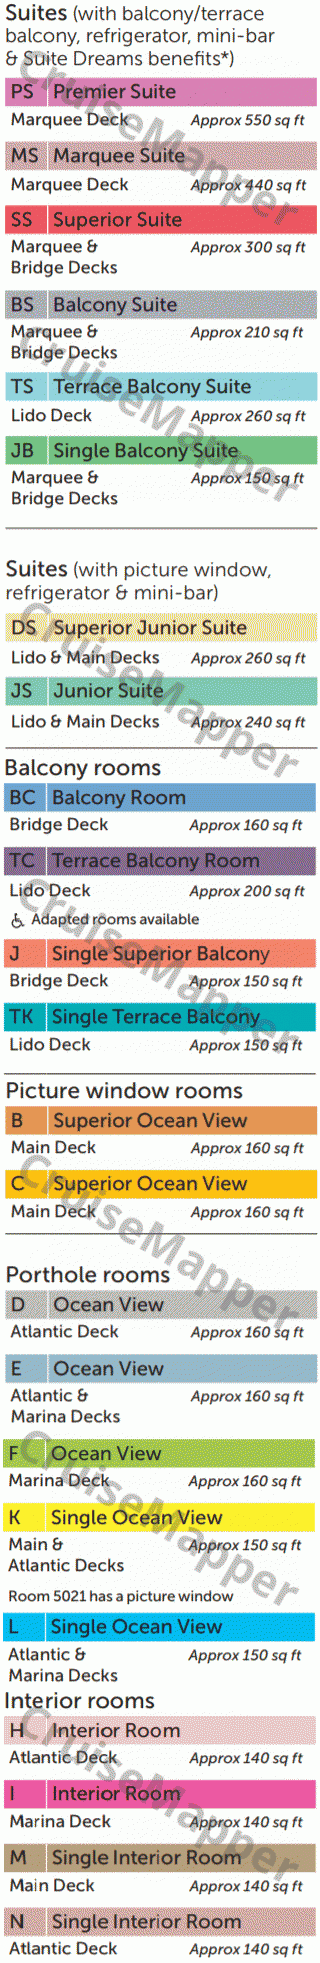 Black Watch deck 7 plan (Lido-Promenade-Cabins) legend